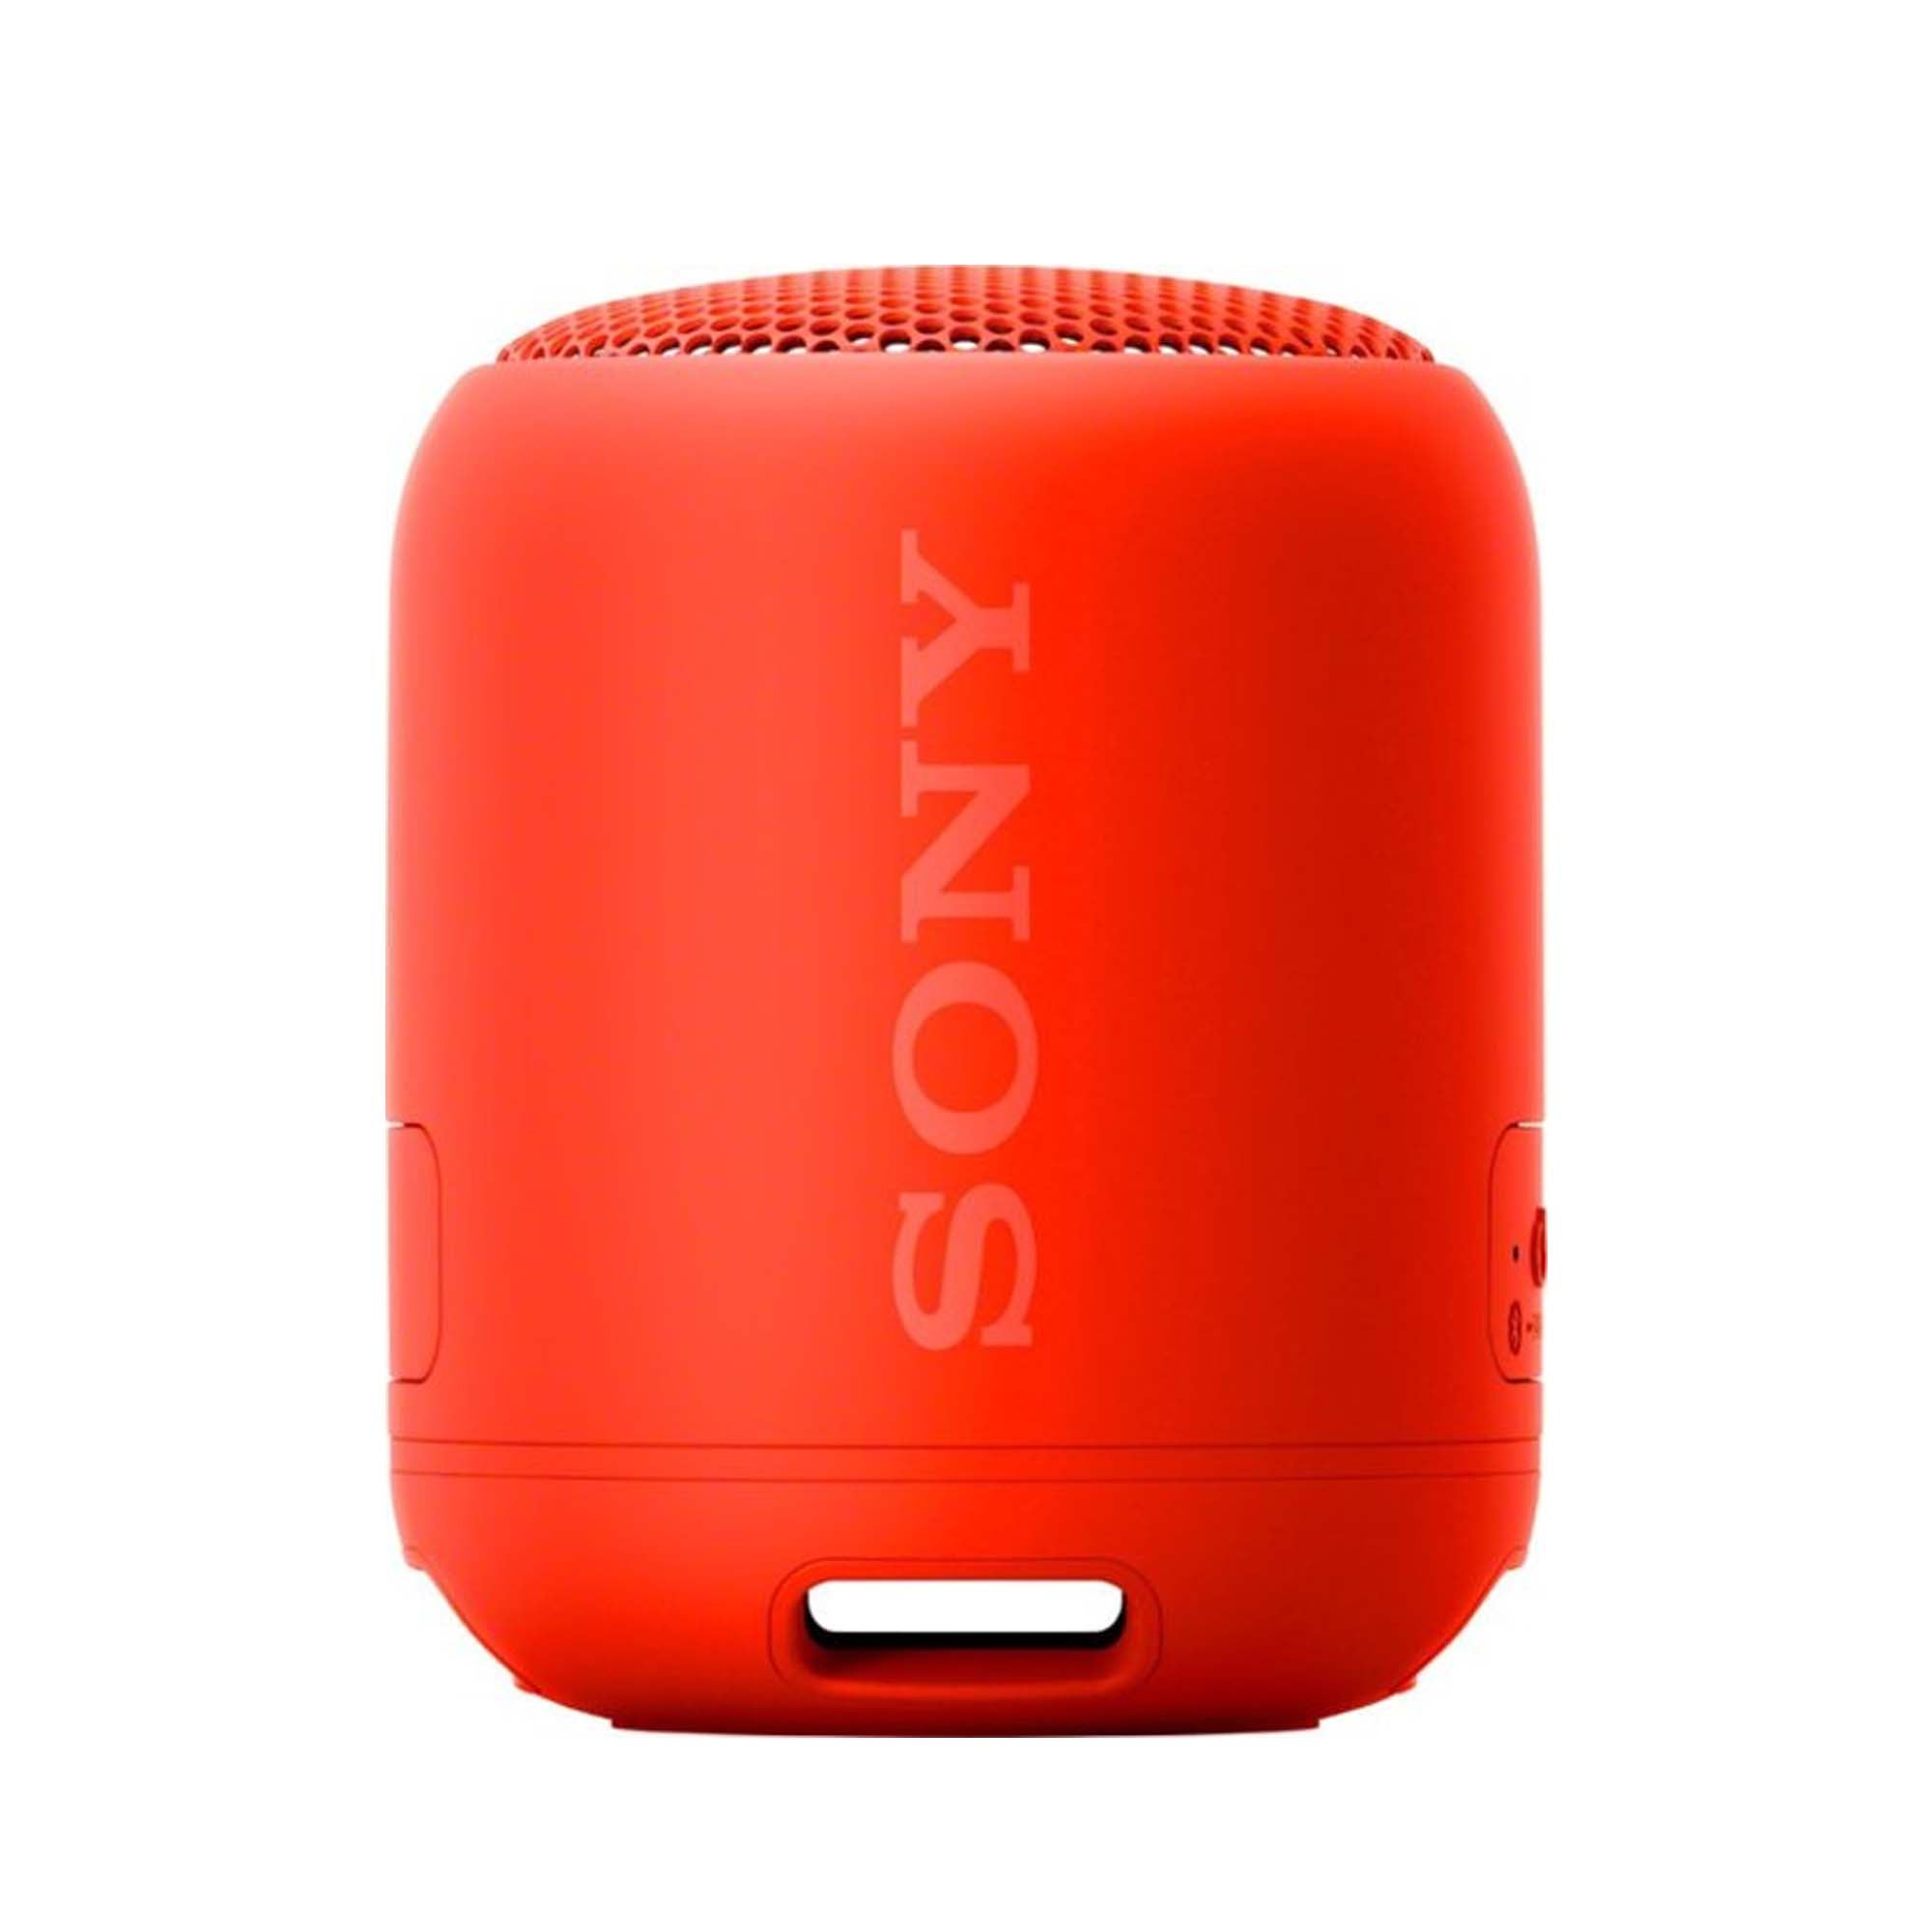 Sony XB12 Portable Wireless Bluetooth Speaker